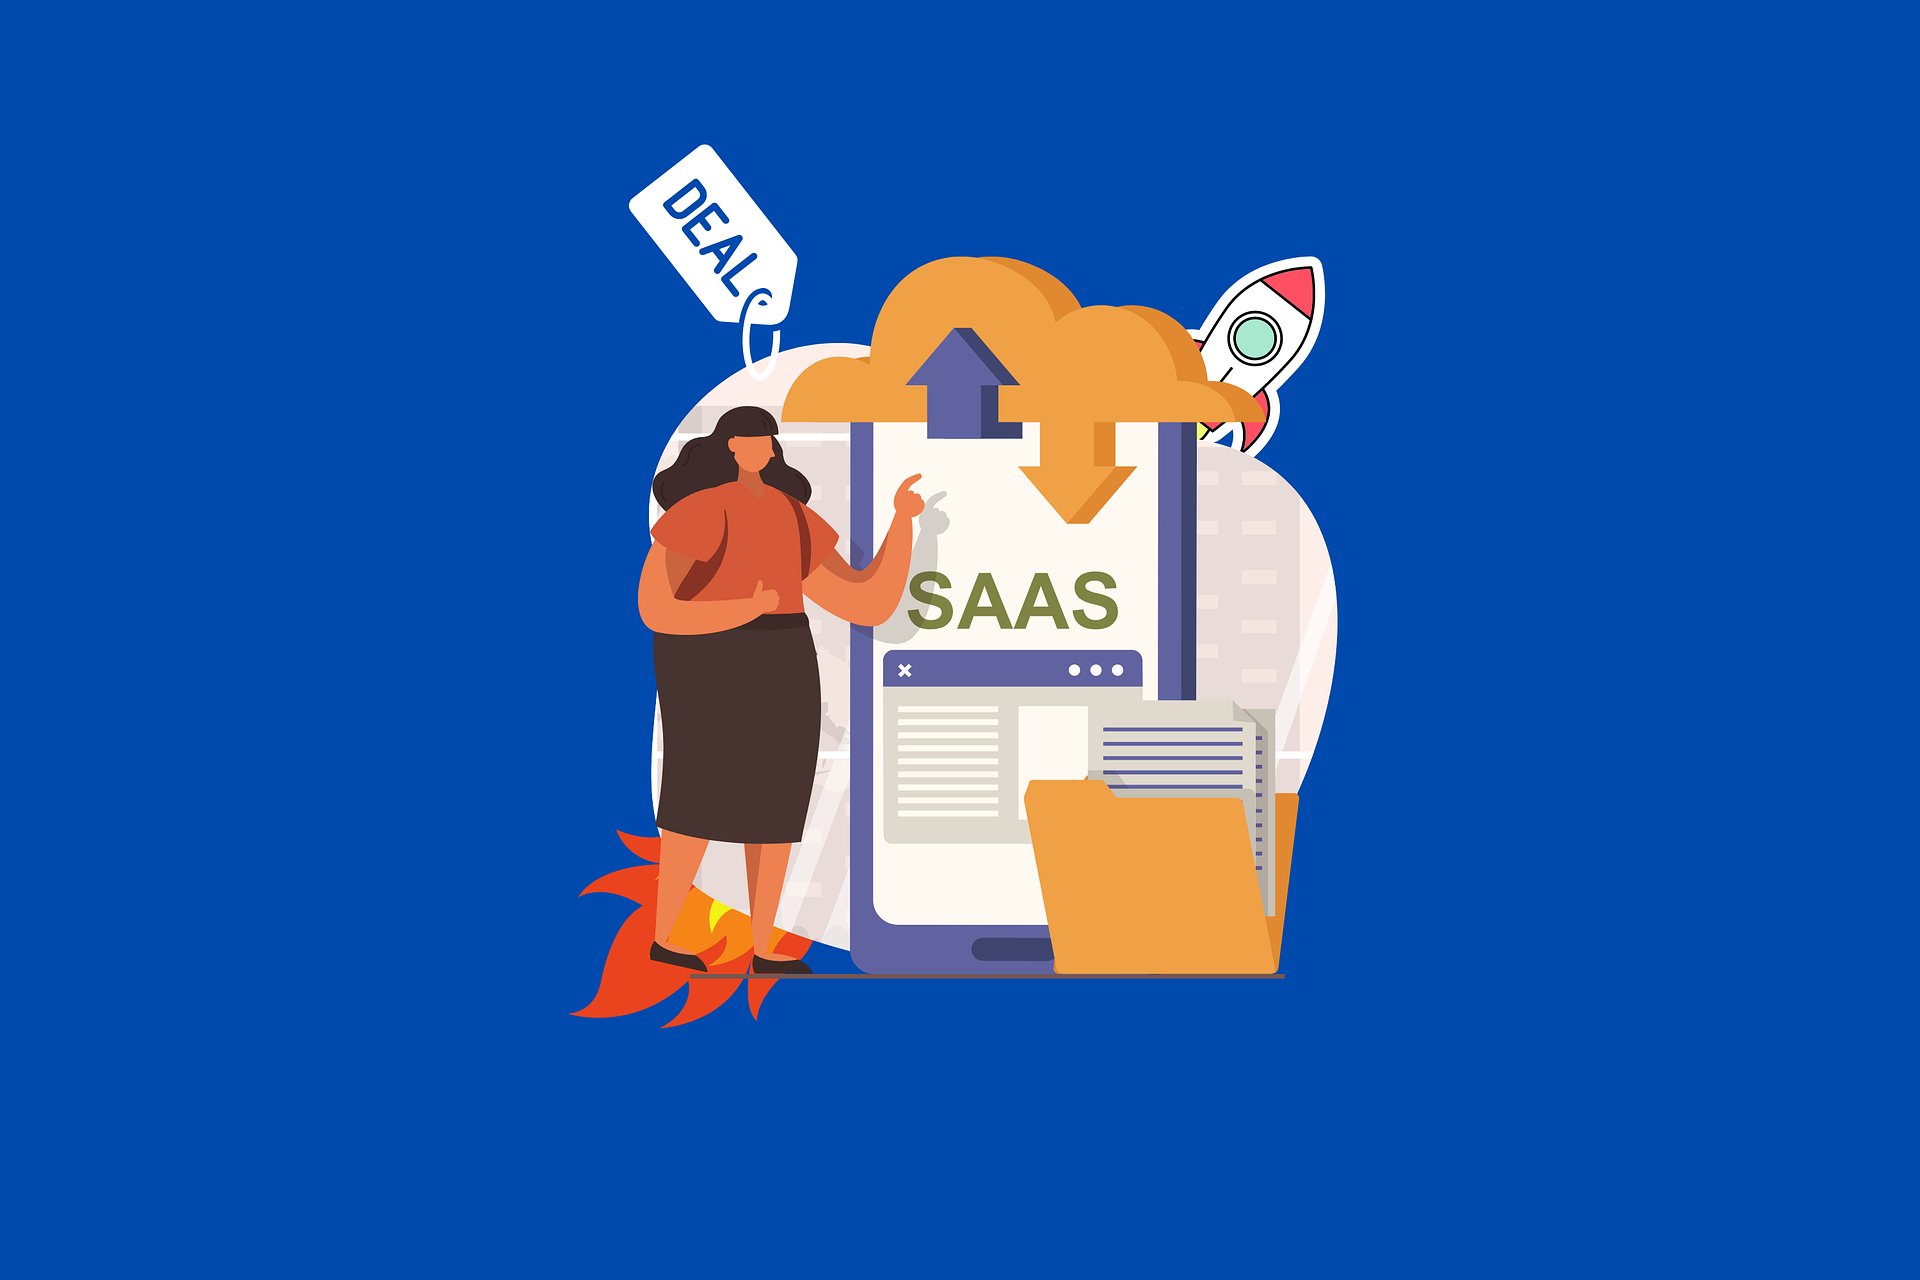 Saas graphic with woman presenting; image by San0198, via Pixabay.com.